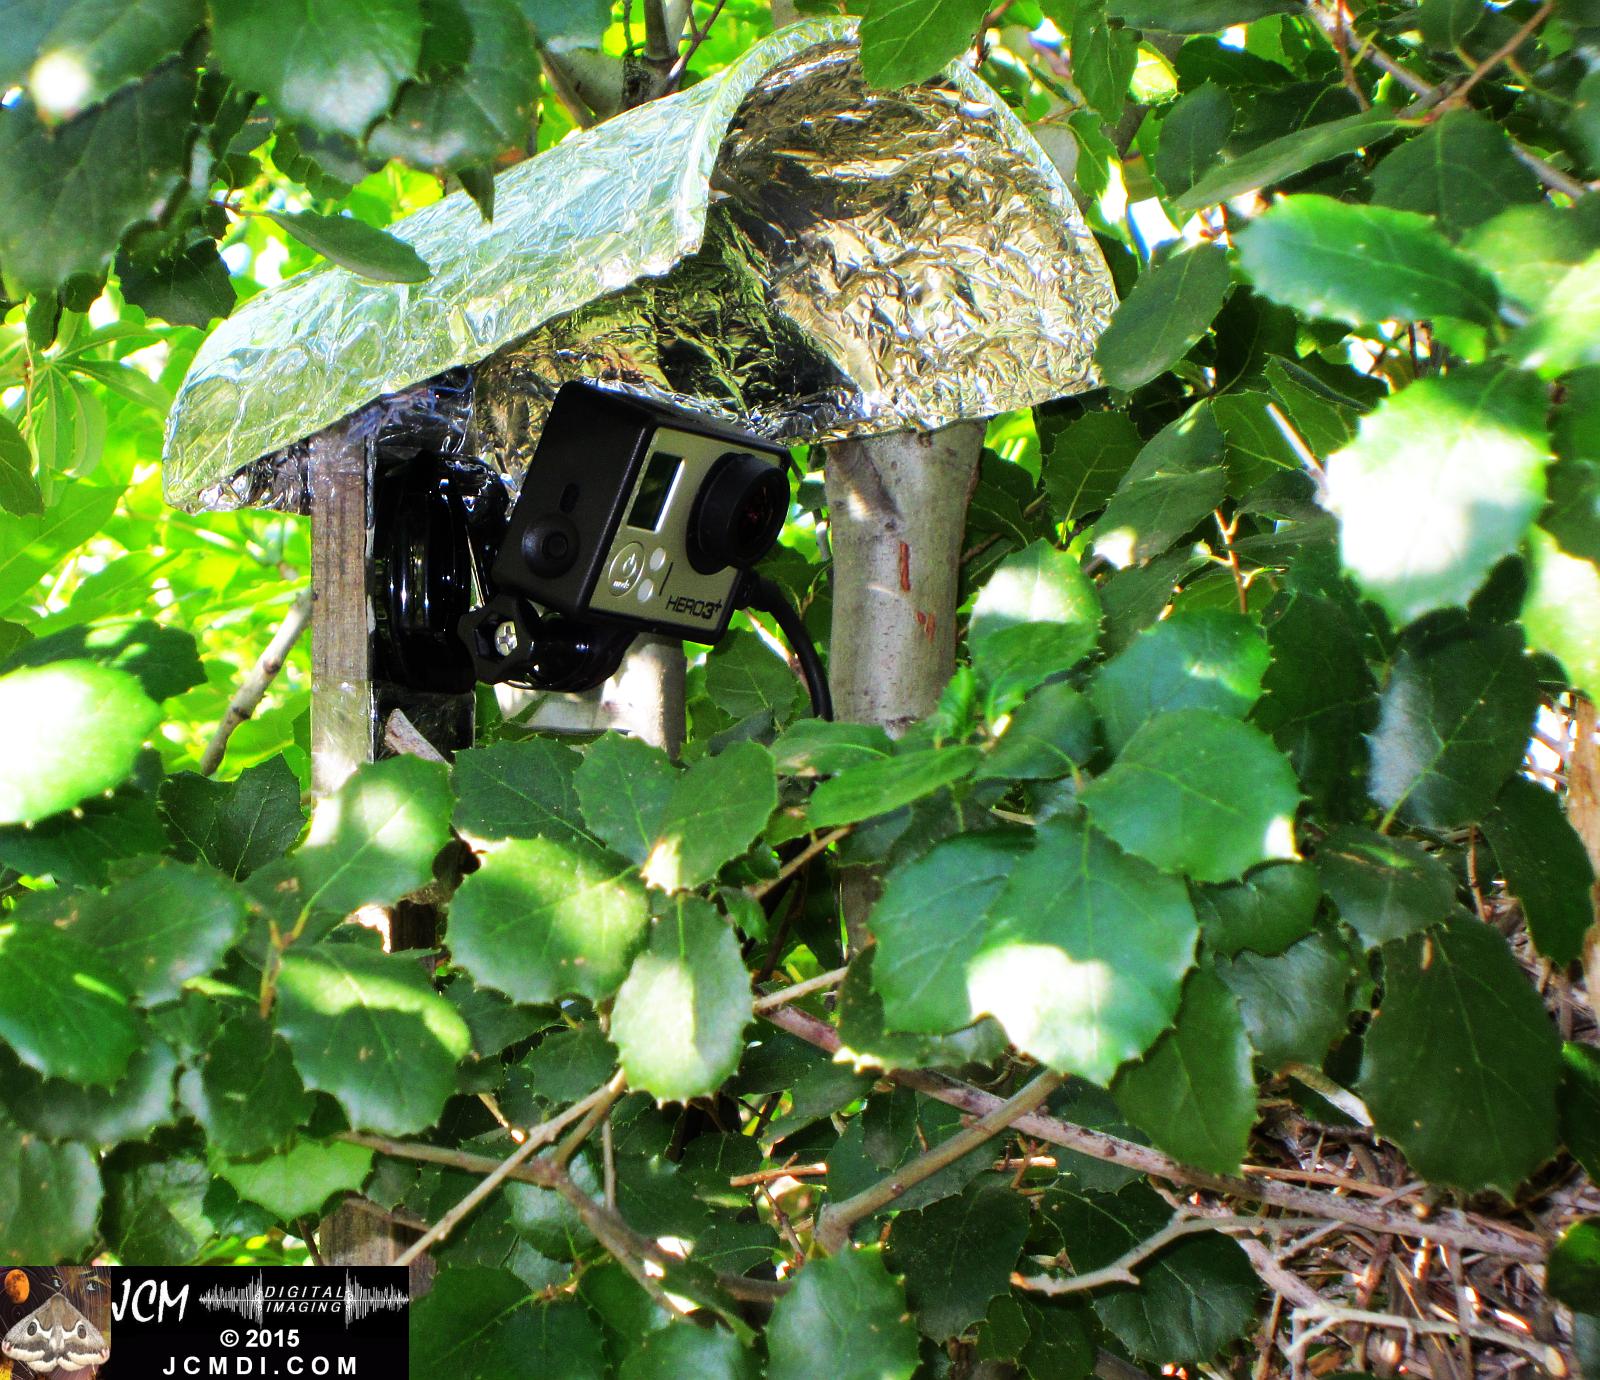 Scrub Jay nest filming set GoPro Hero3+ Black polecam 4-4-2015 Santa Clarita JCMDI.COM